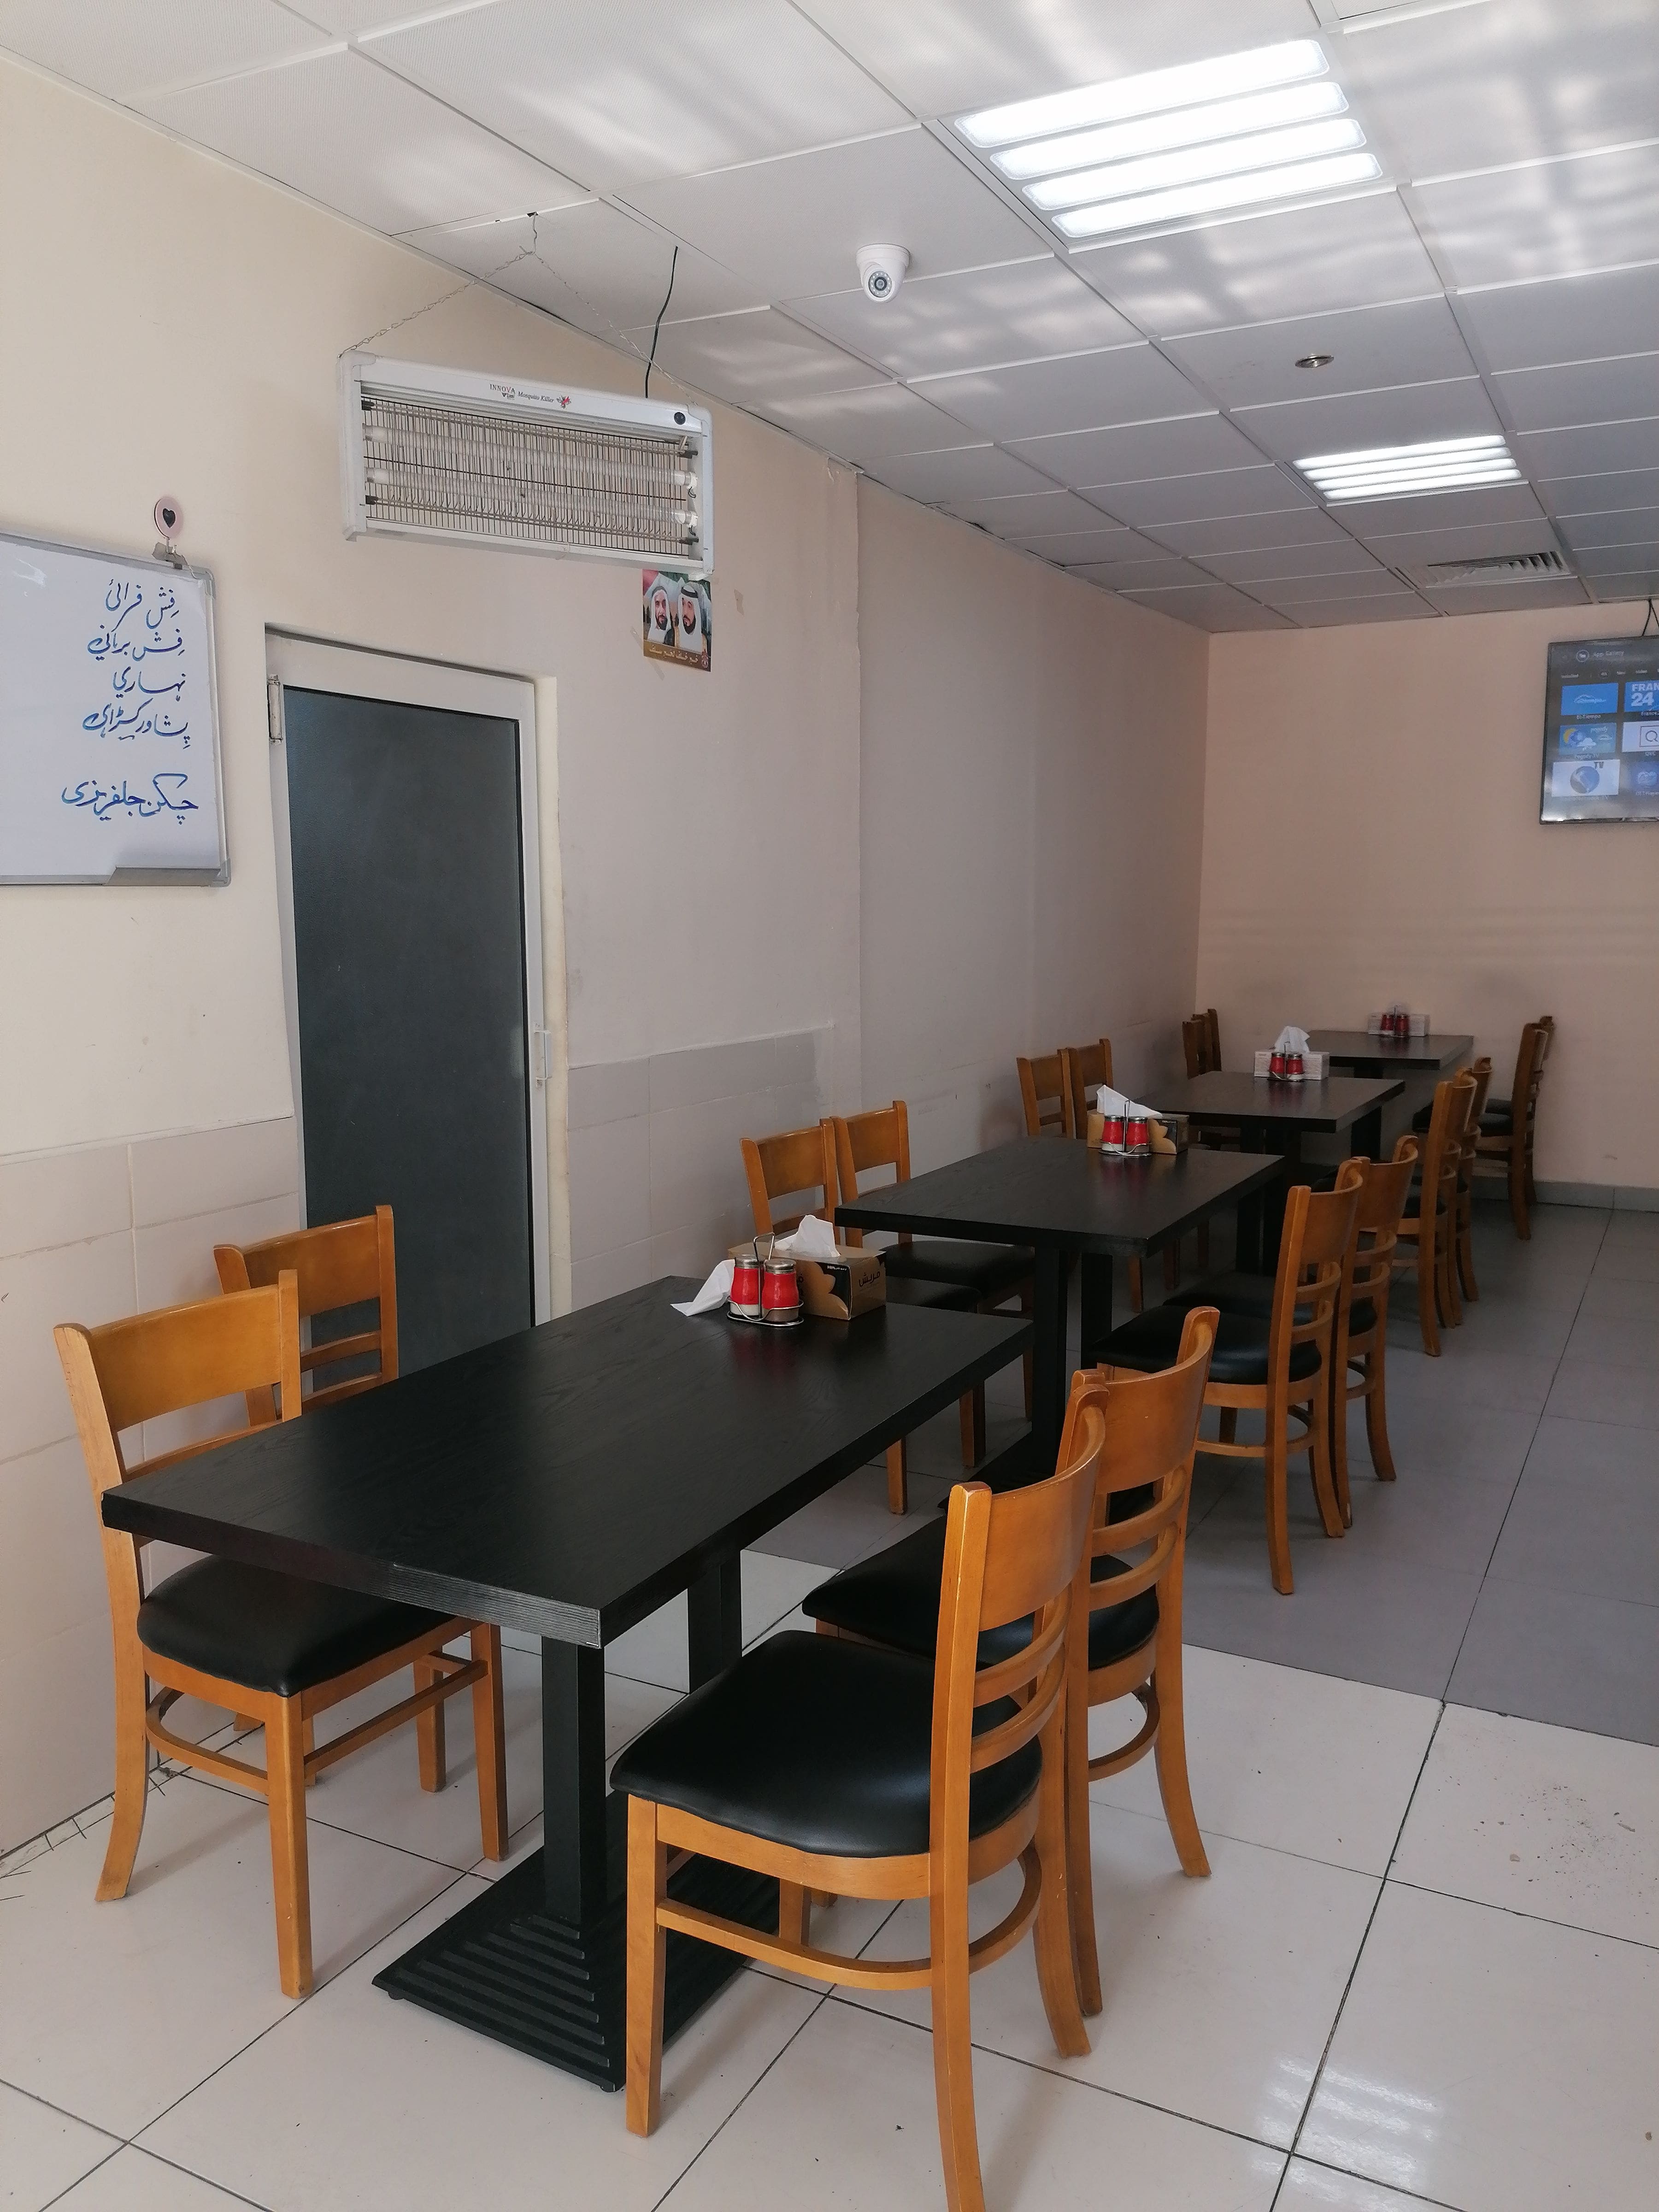 restaurants tourist club area abu dhabi